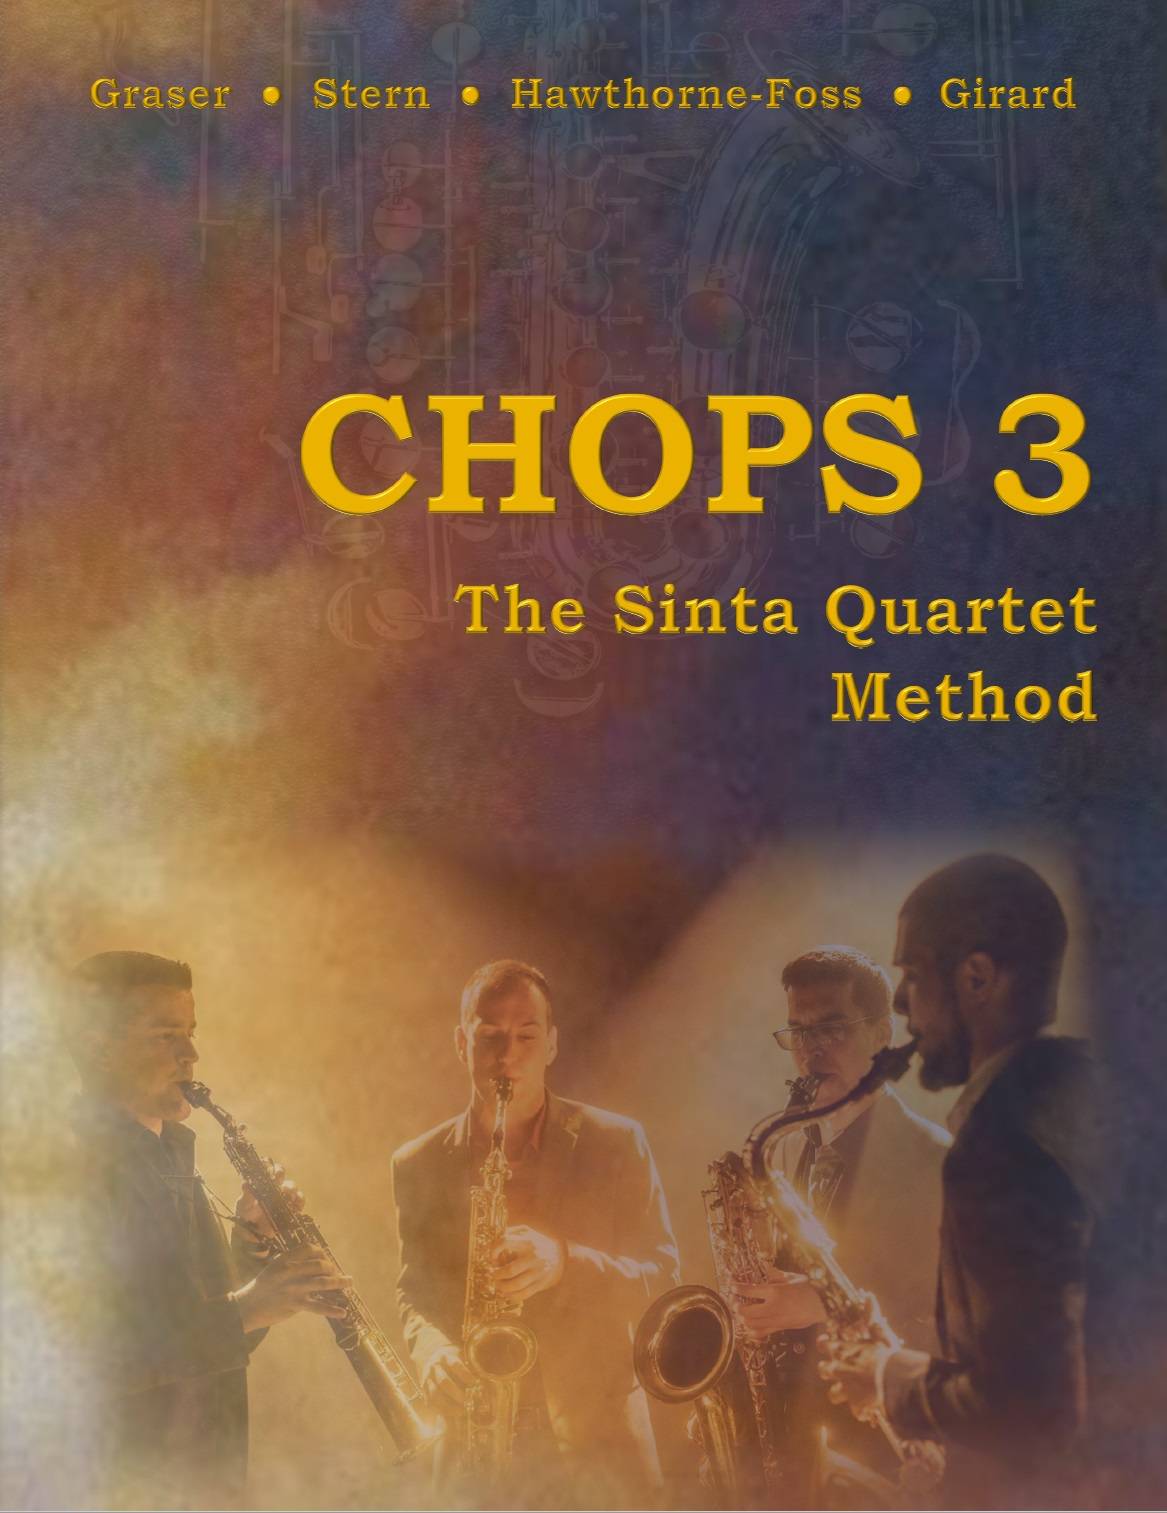 Chops 3 book cover